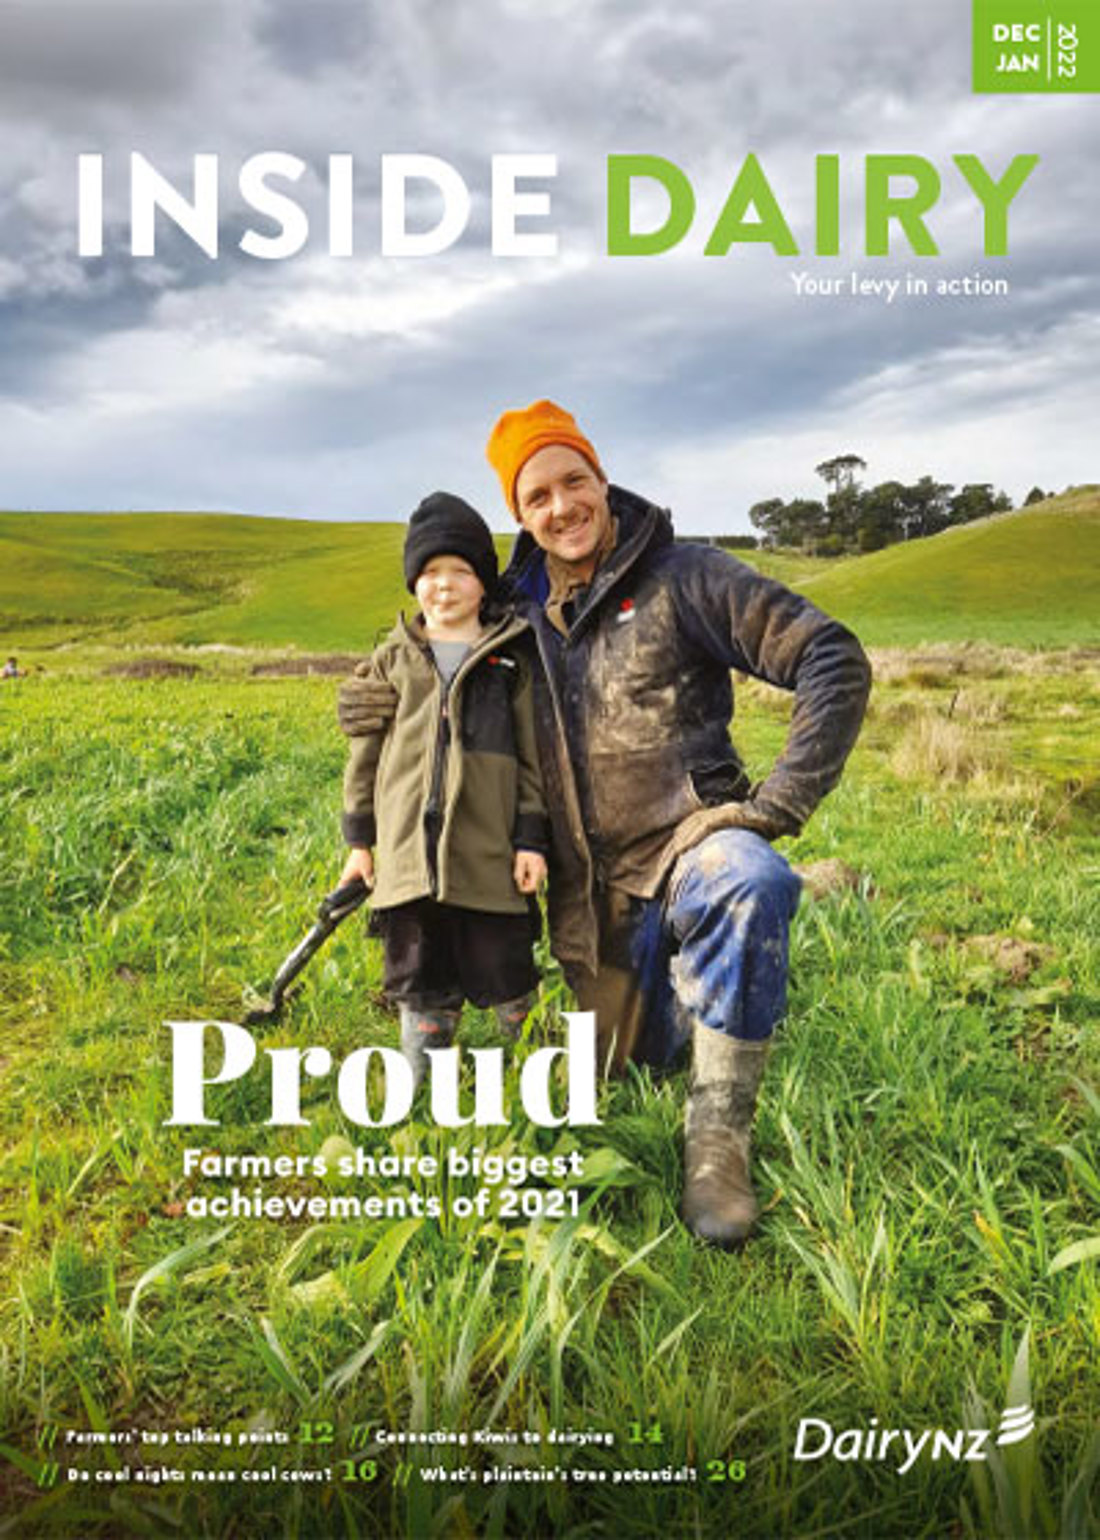 Inside Dairy Dec Jan 2021 Image